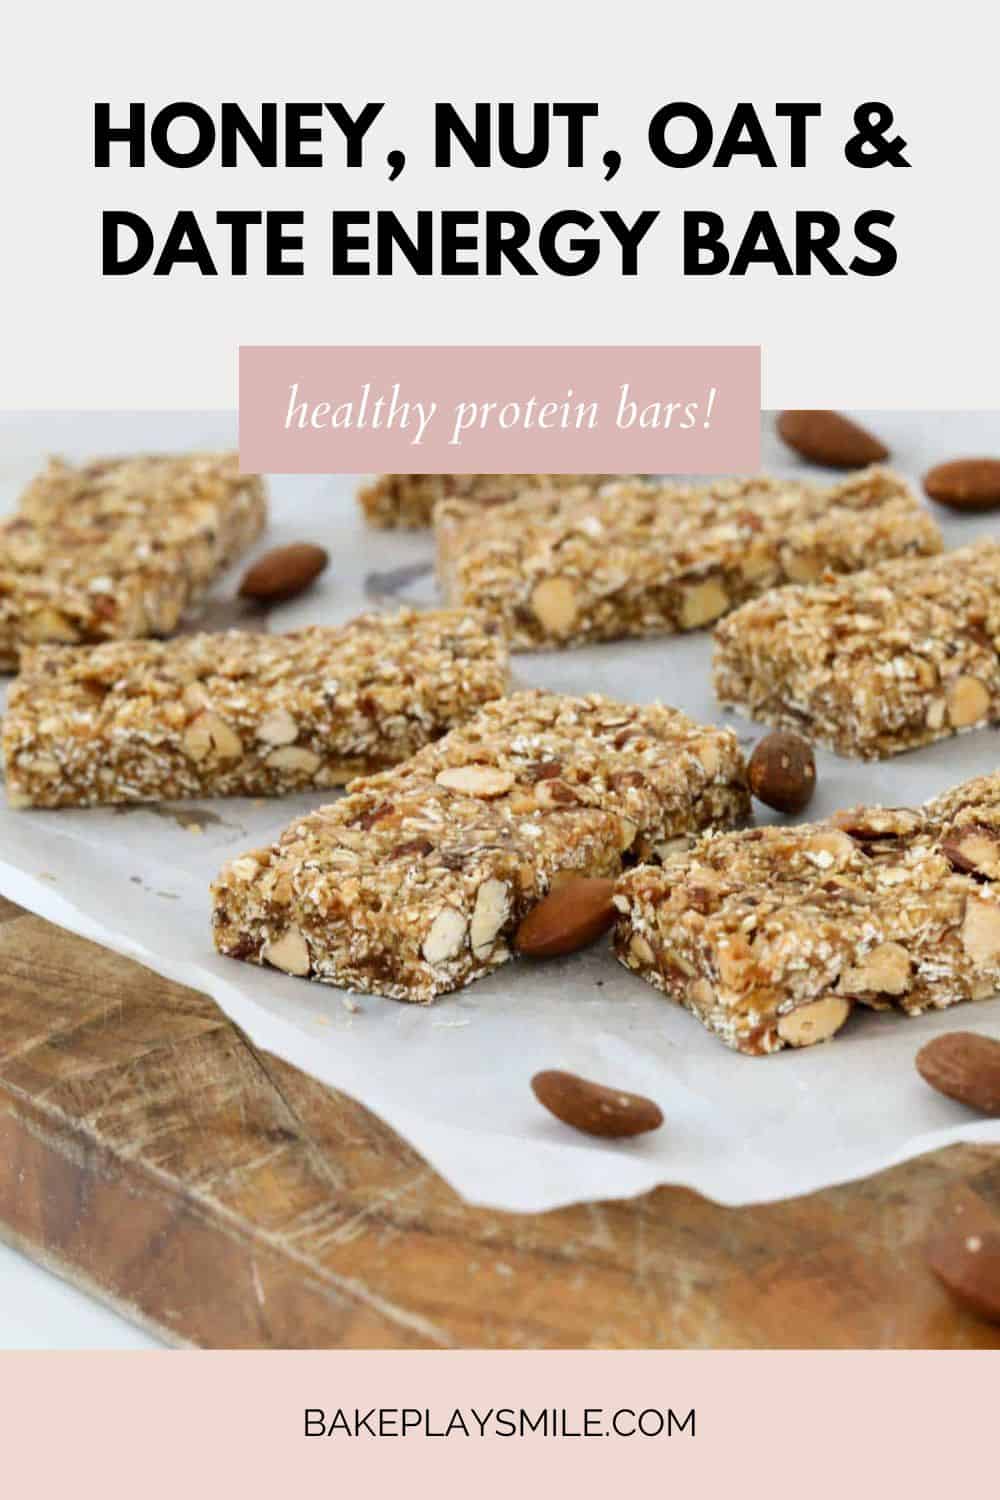 https://bakeplaysmile.com/wp-content/uploads/2022/09/Healthy-Nut-Oat-Date-Energy-Bars.jpg